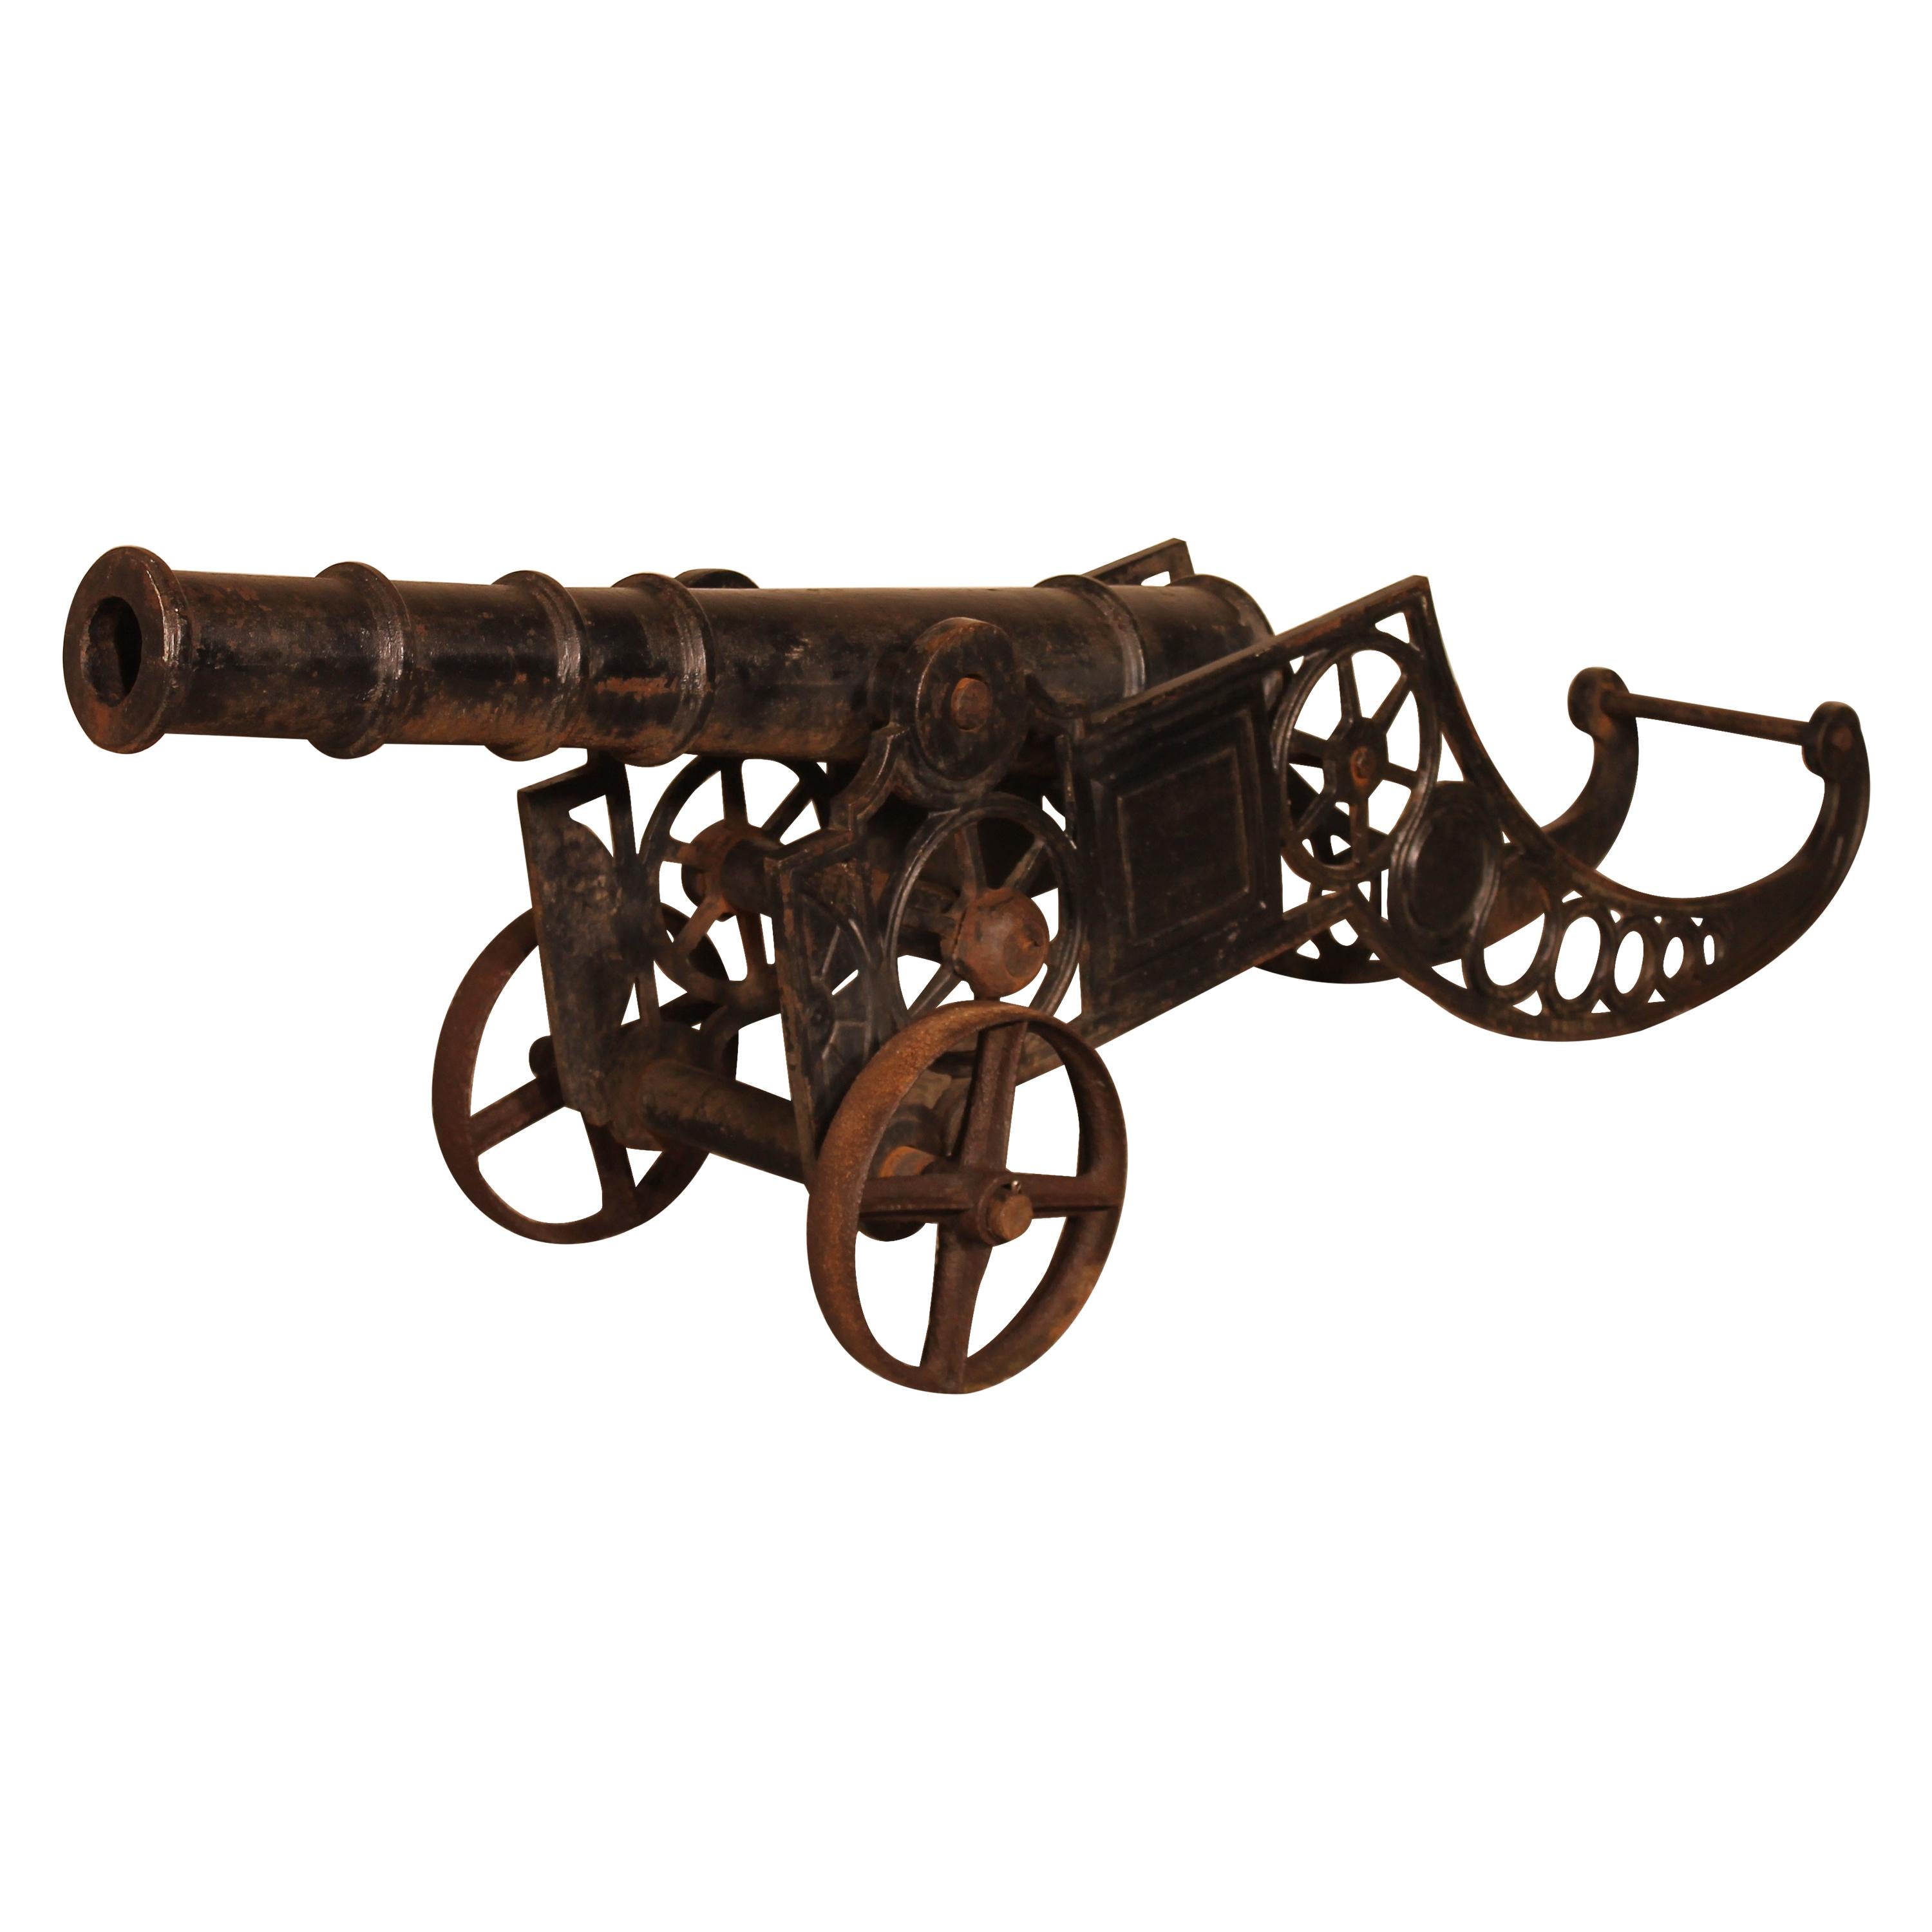 Brass & Cast Iron Cannon Desk Weight Ornament Marked 1796 Canon Militaria Model 